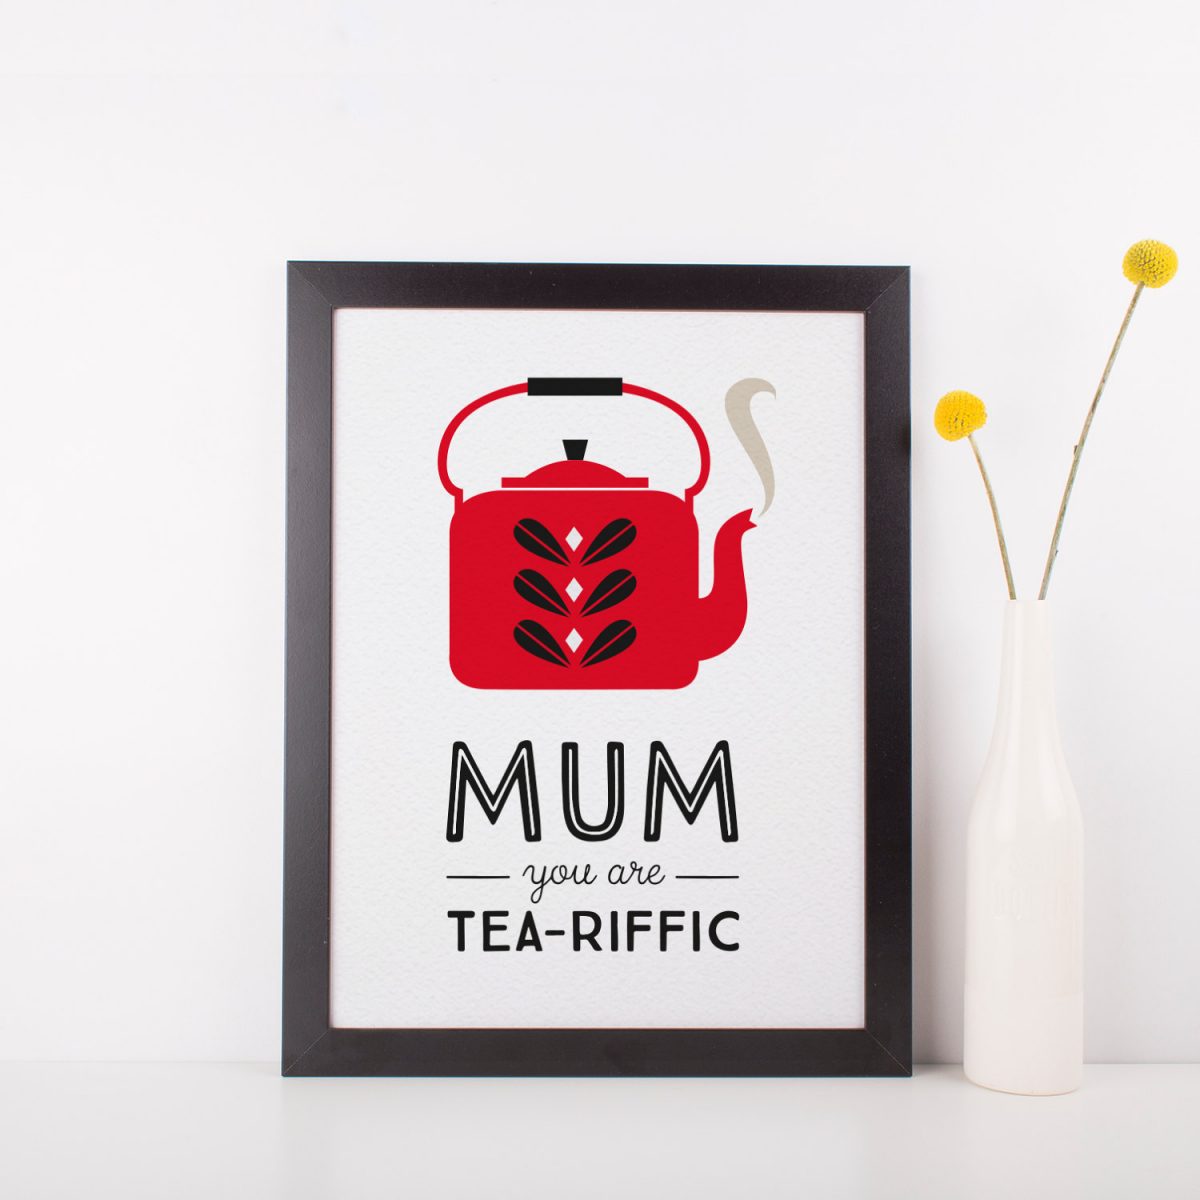 Mum Tea Print, Red Retro Kettle Print, Scandinavian Design, Mid Century Poster, Gift for Mum, Mothers Day Gift, Kitchen Art, Catherine Holm